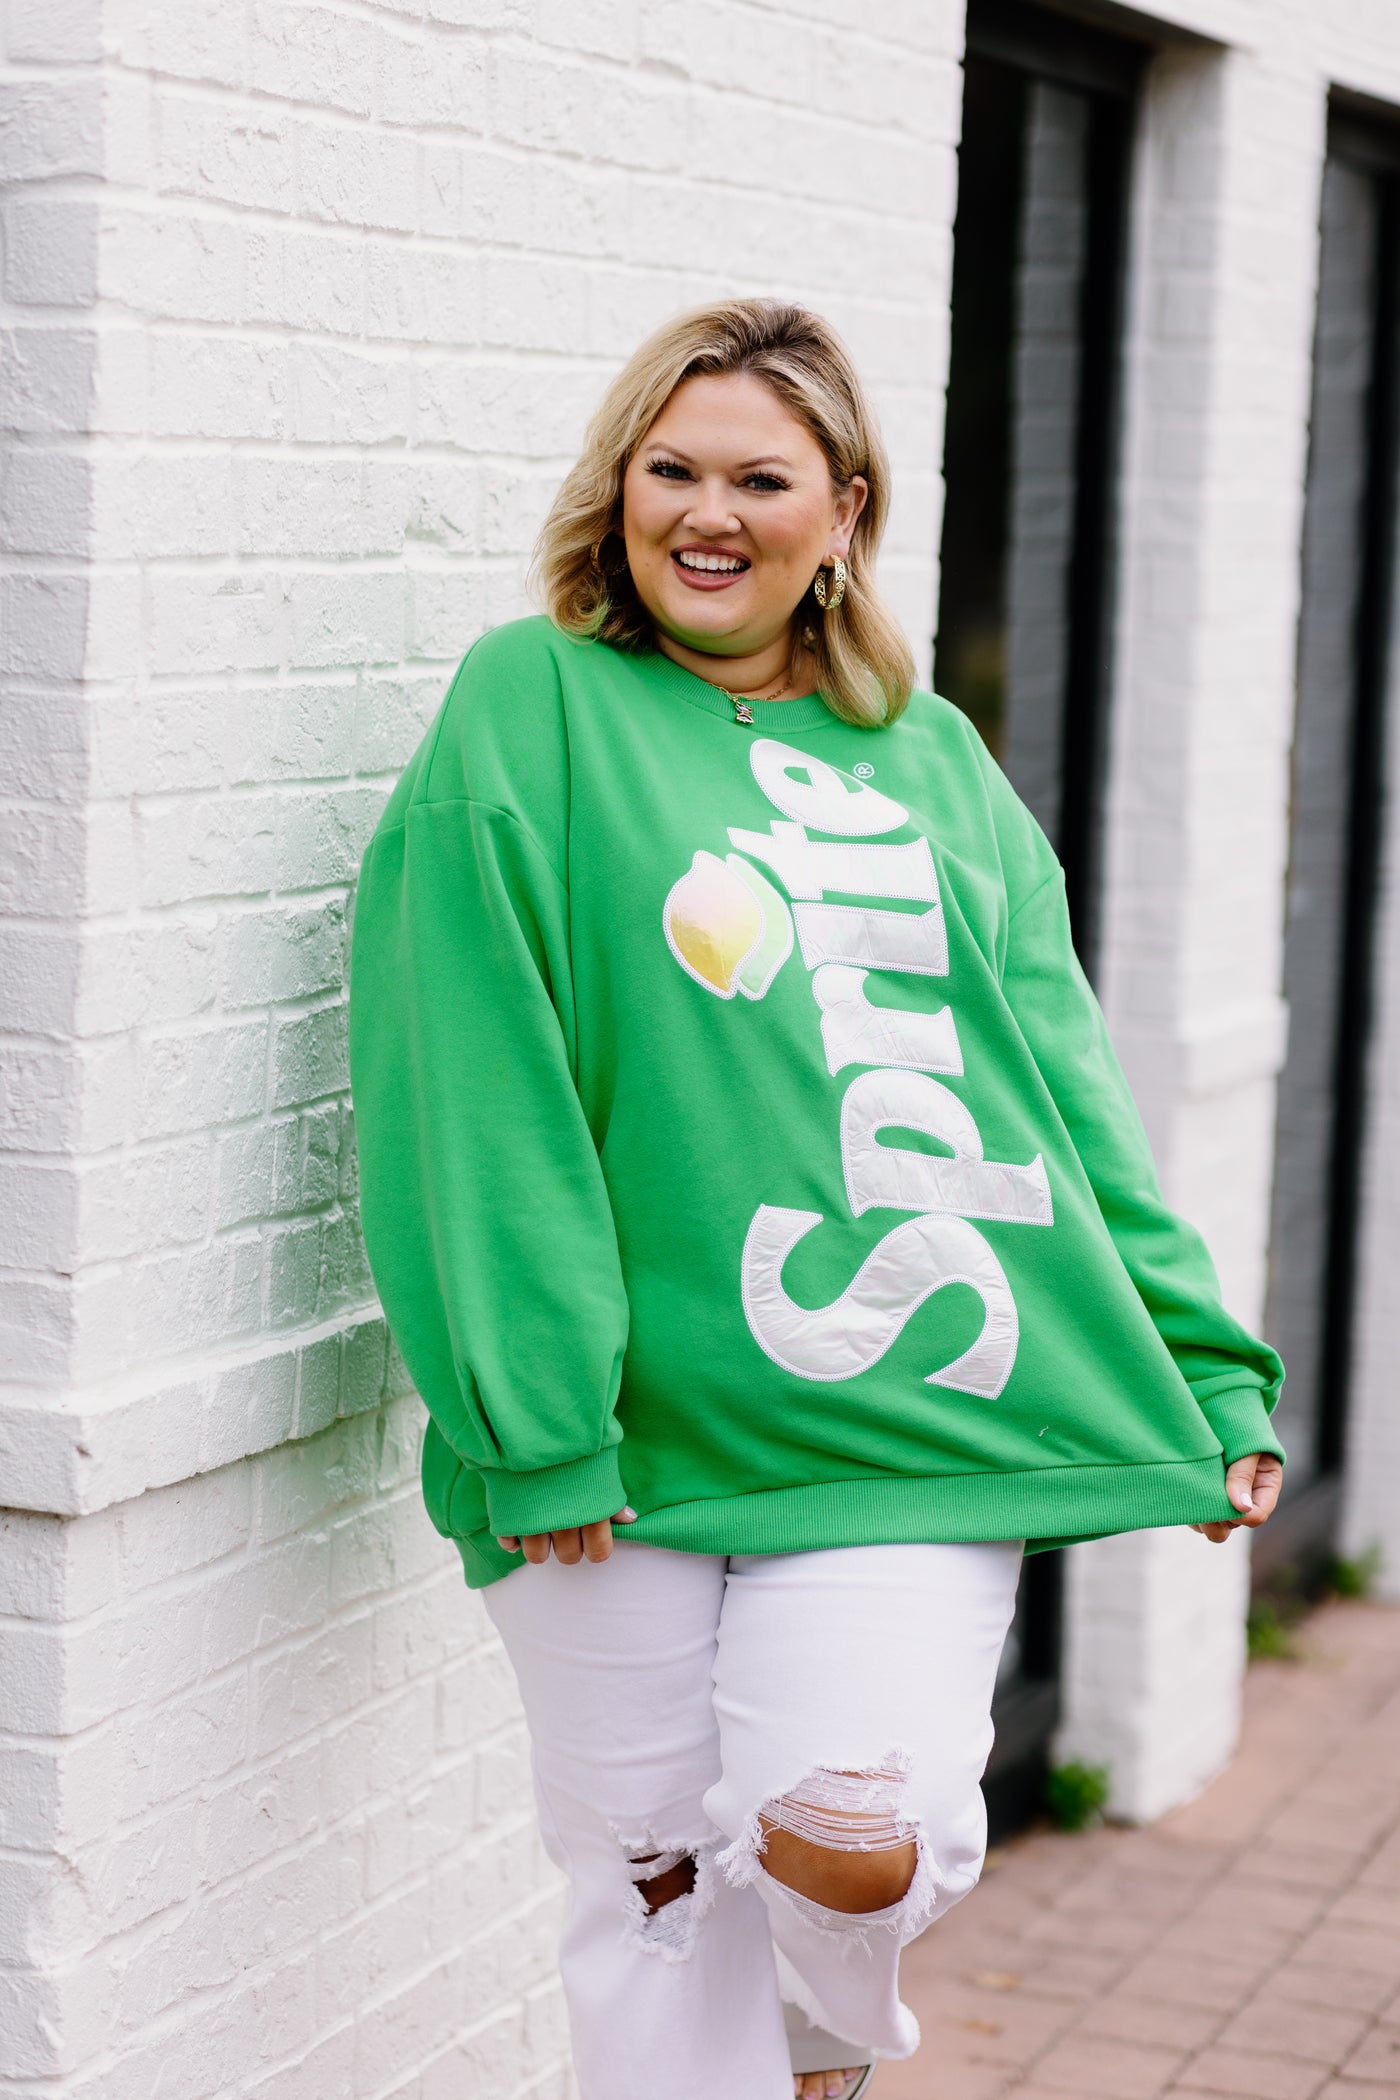 Queen Of Sparkles Green Sprite Logo Sweatshirt